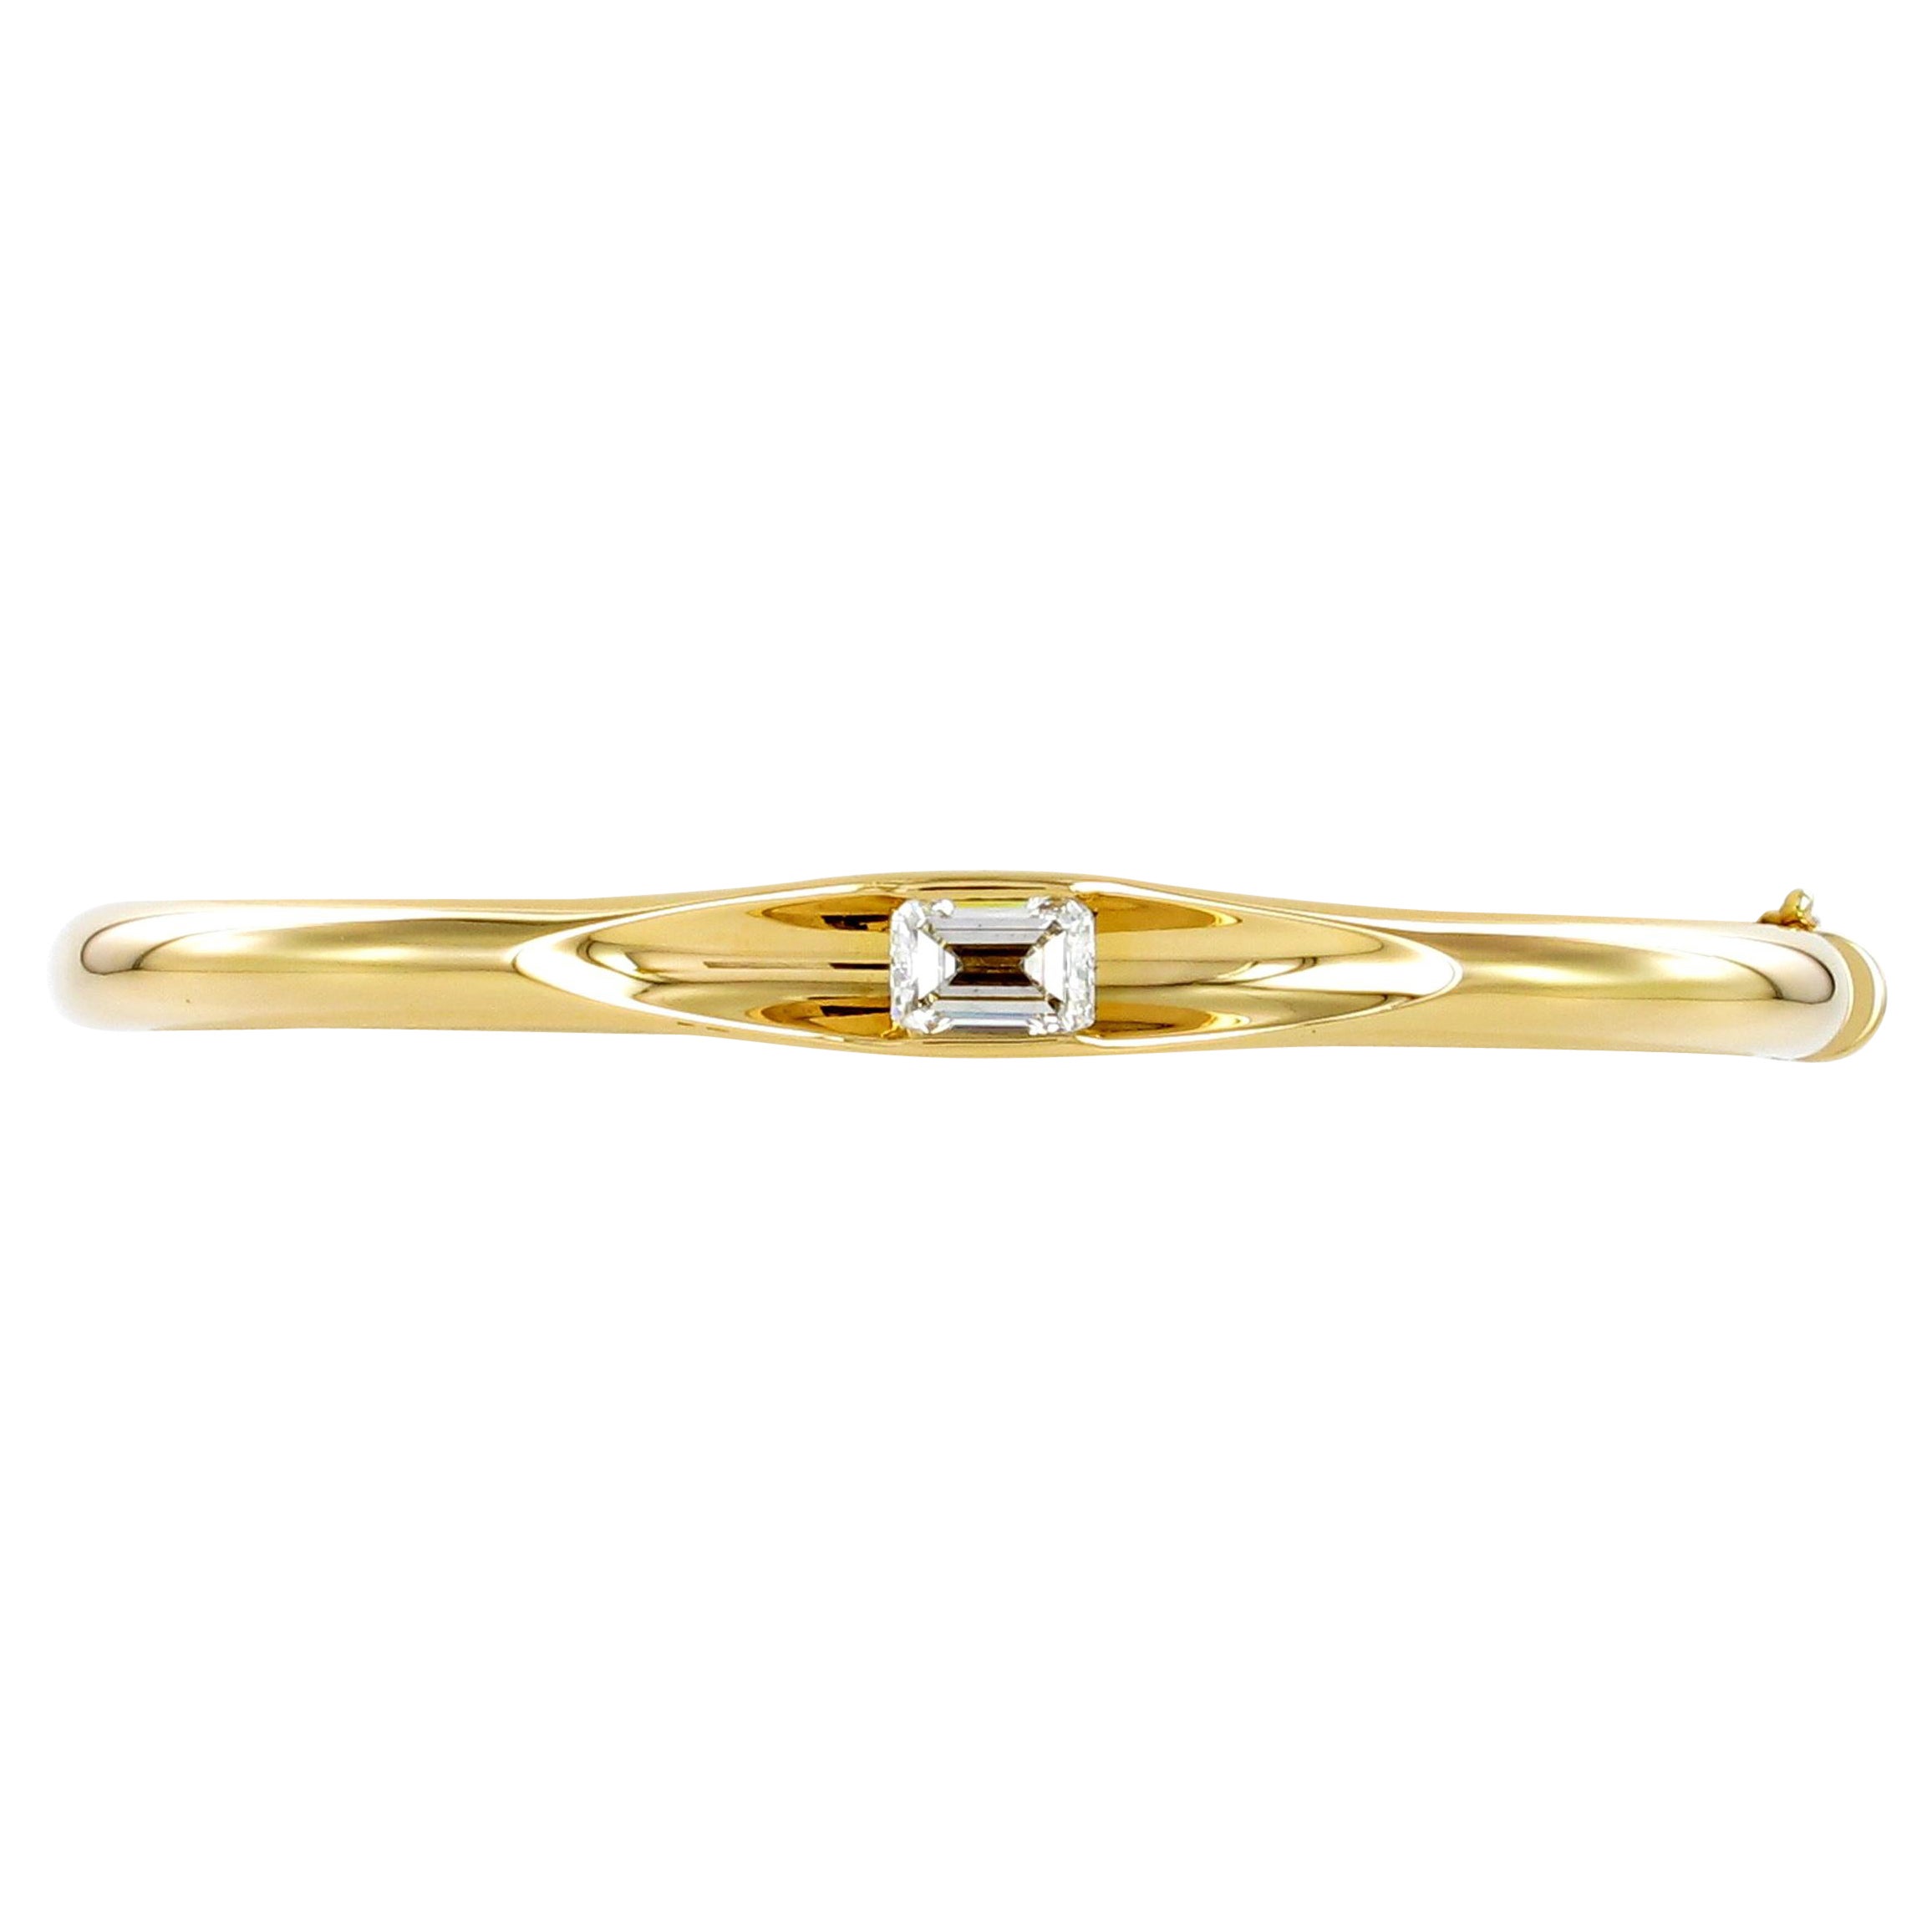 Superb 1.34 Ct Emerald-Cut Diamond Bangle by Gübelin in 18 Karat Yellow Gold